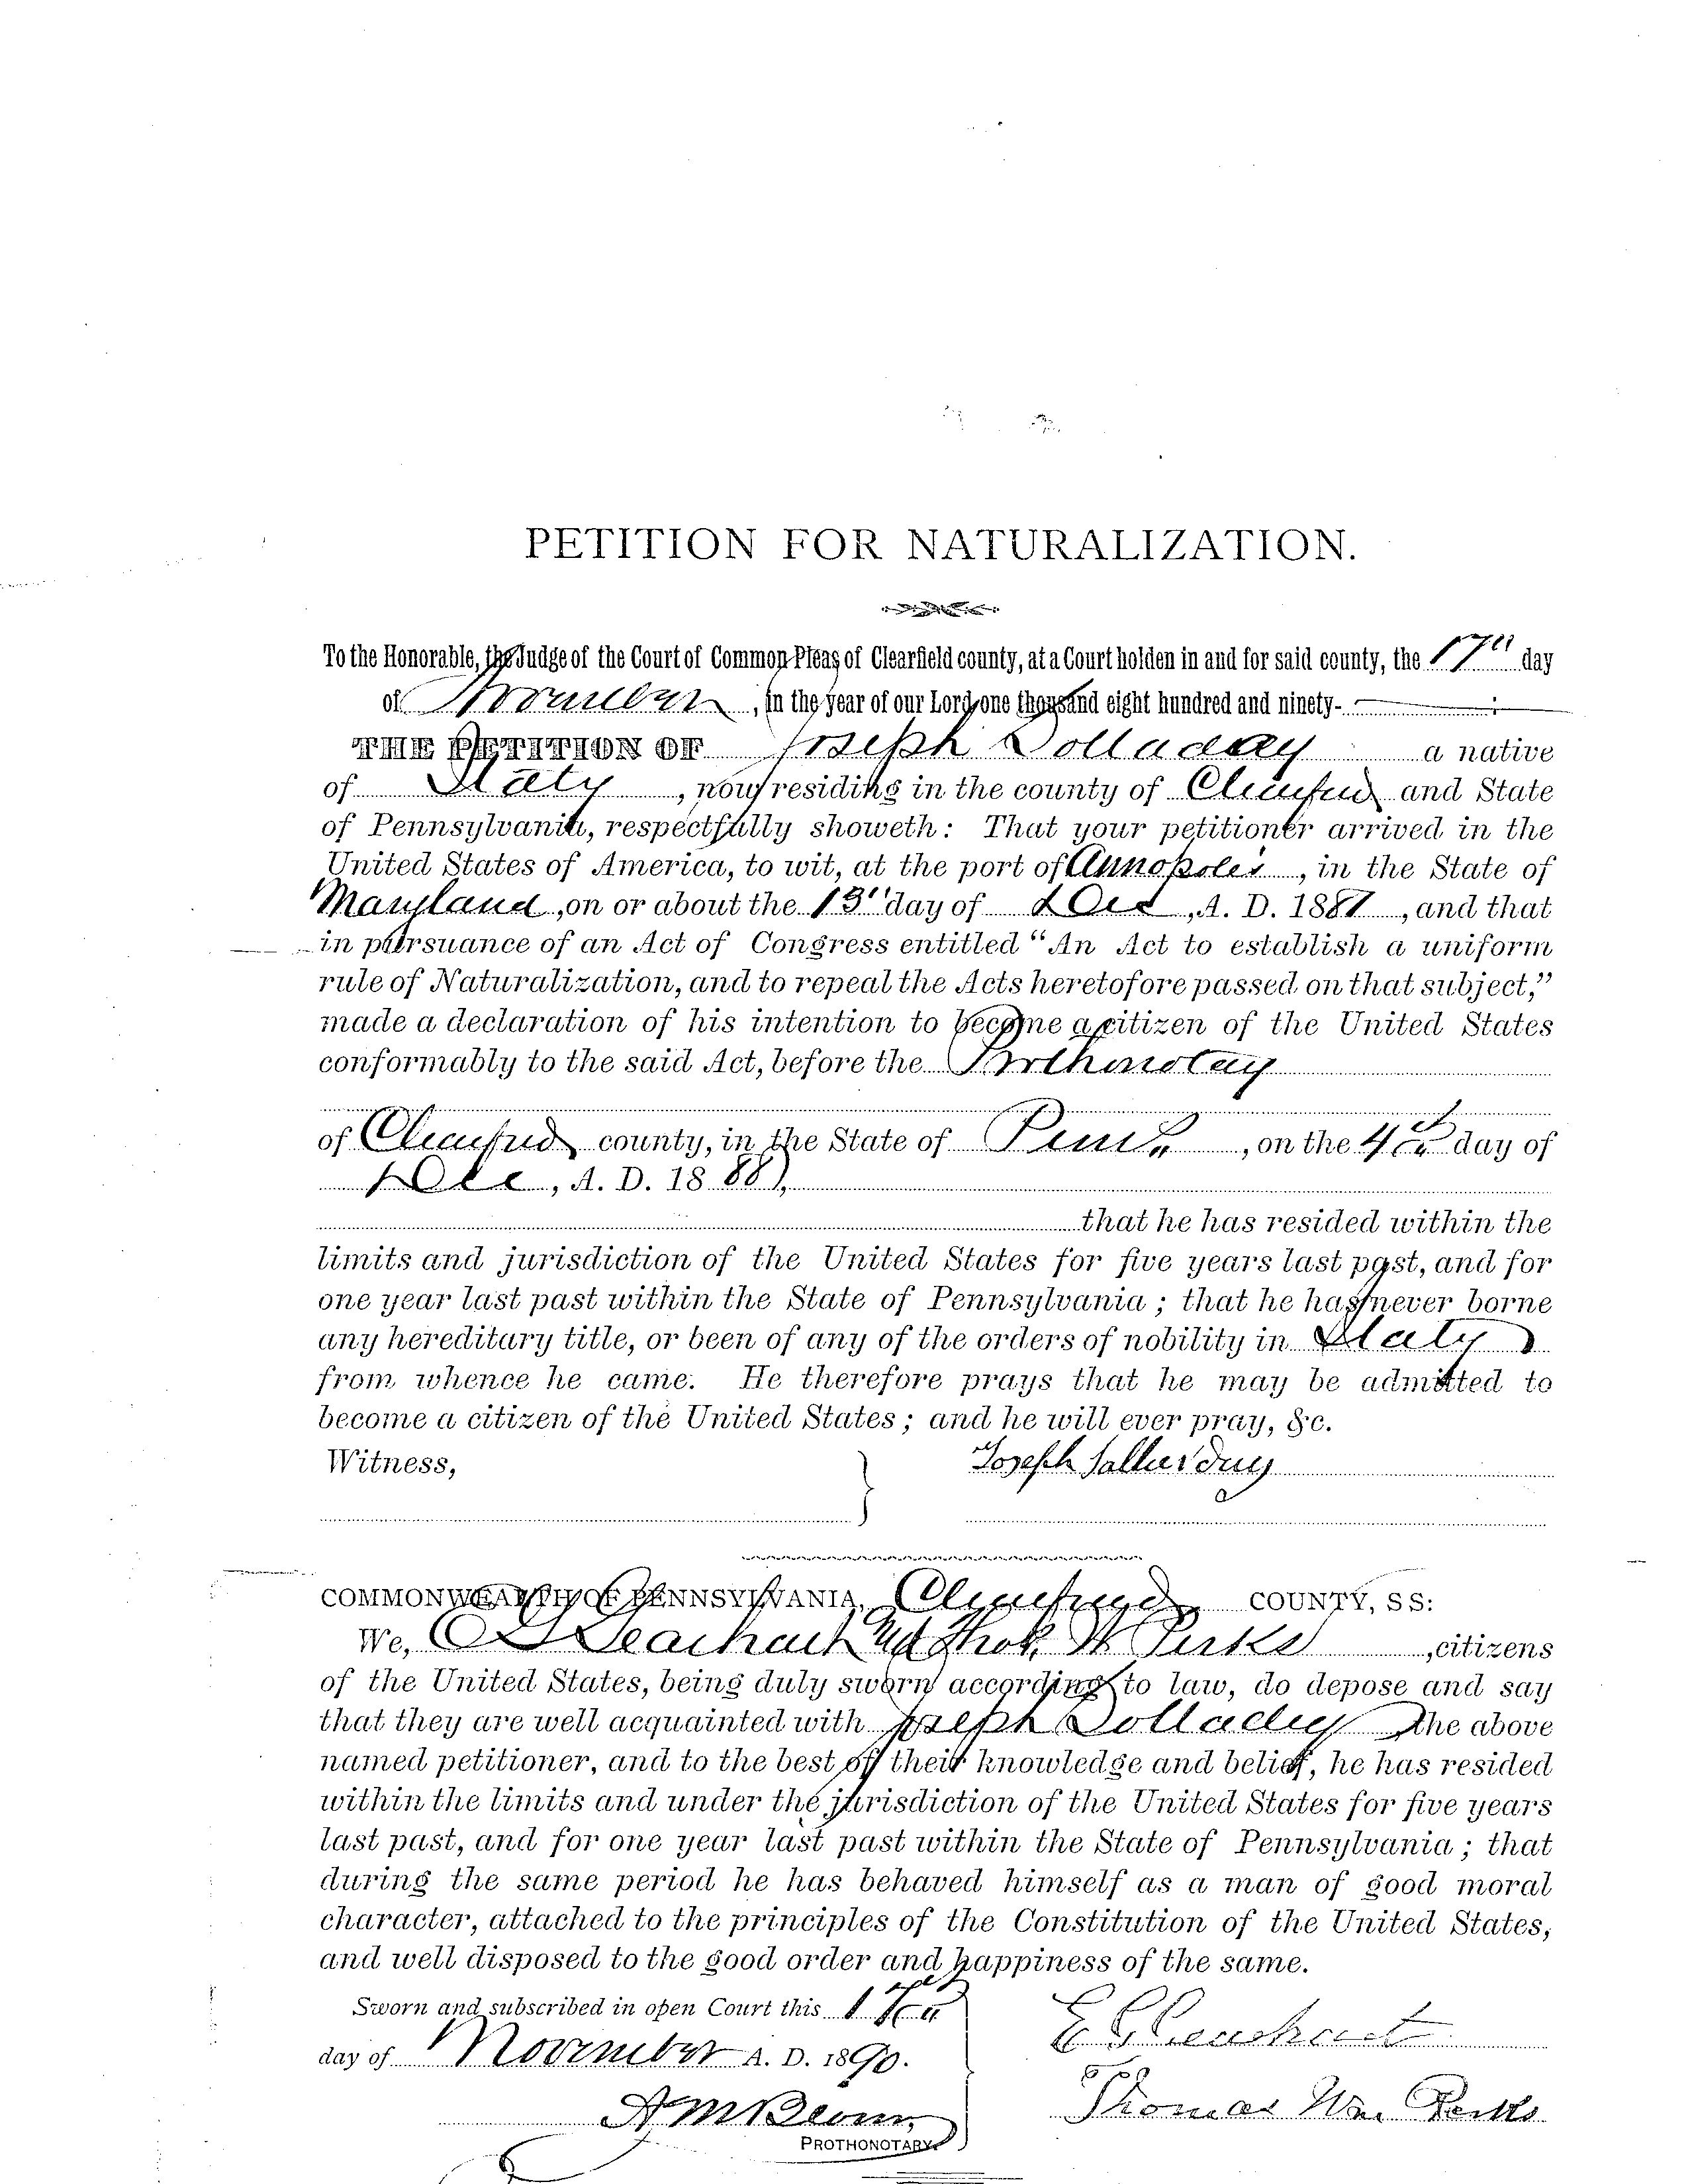 Jos Sallurday Petition for Naturalization